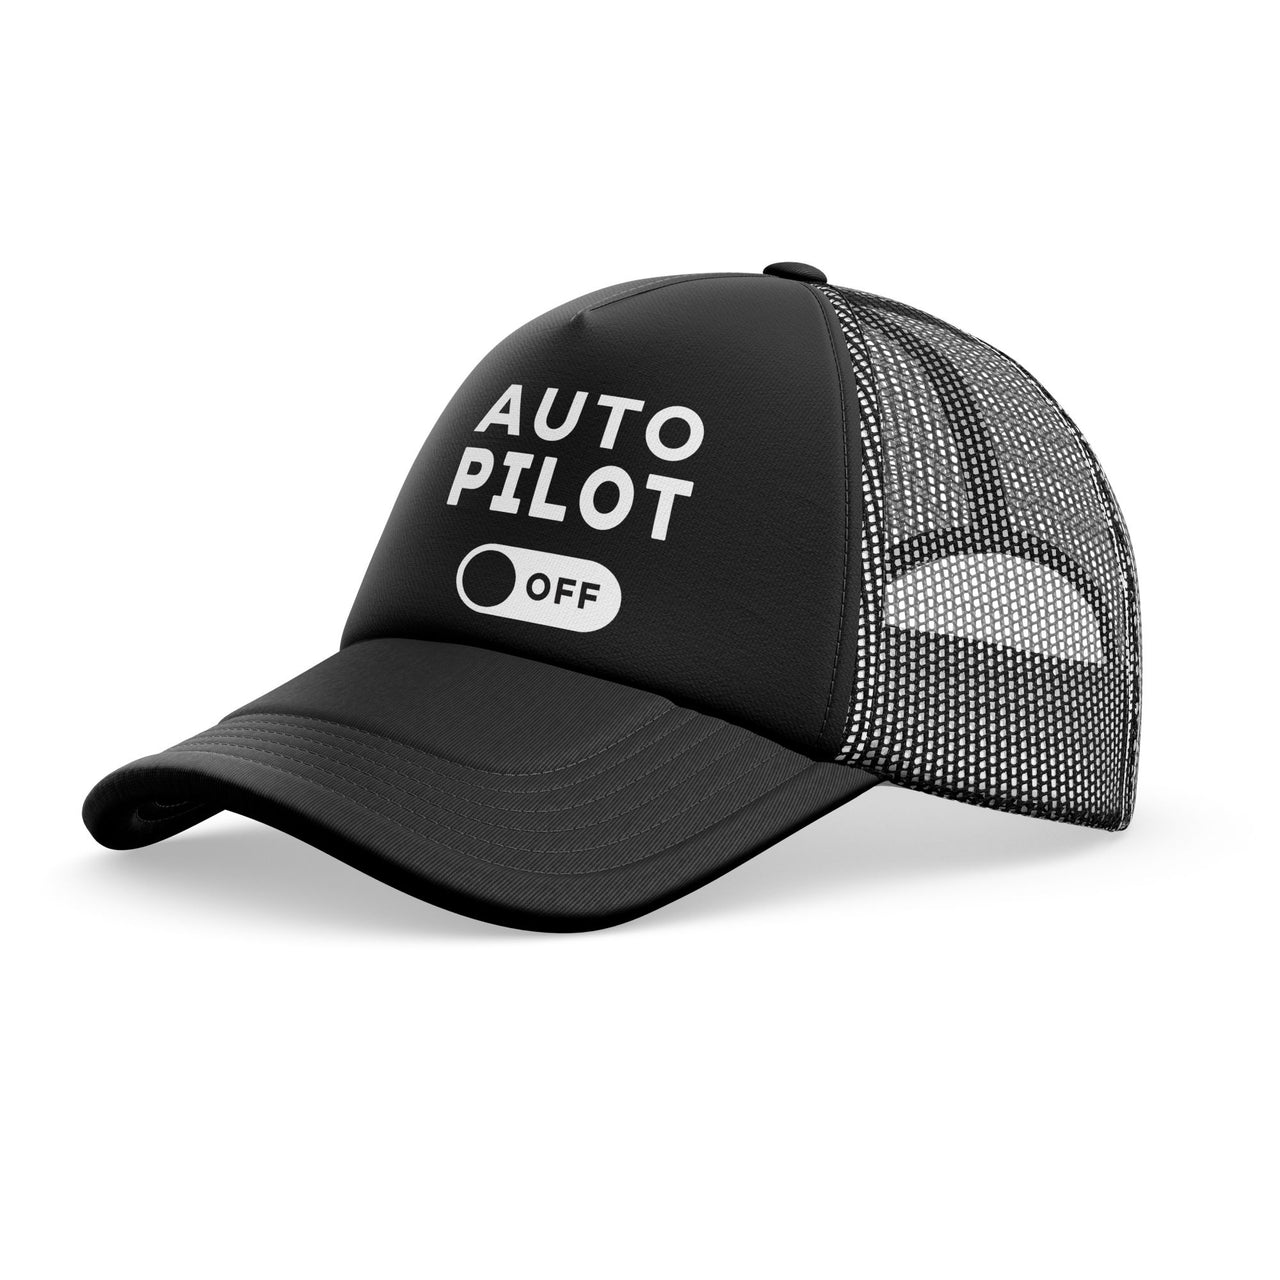 Auto Pilot Off Designed Trucker Caps & Hats